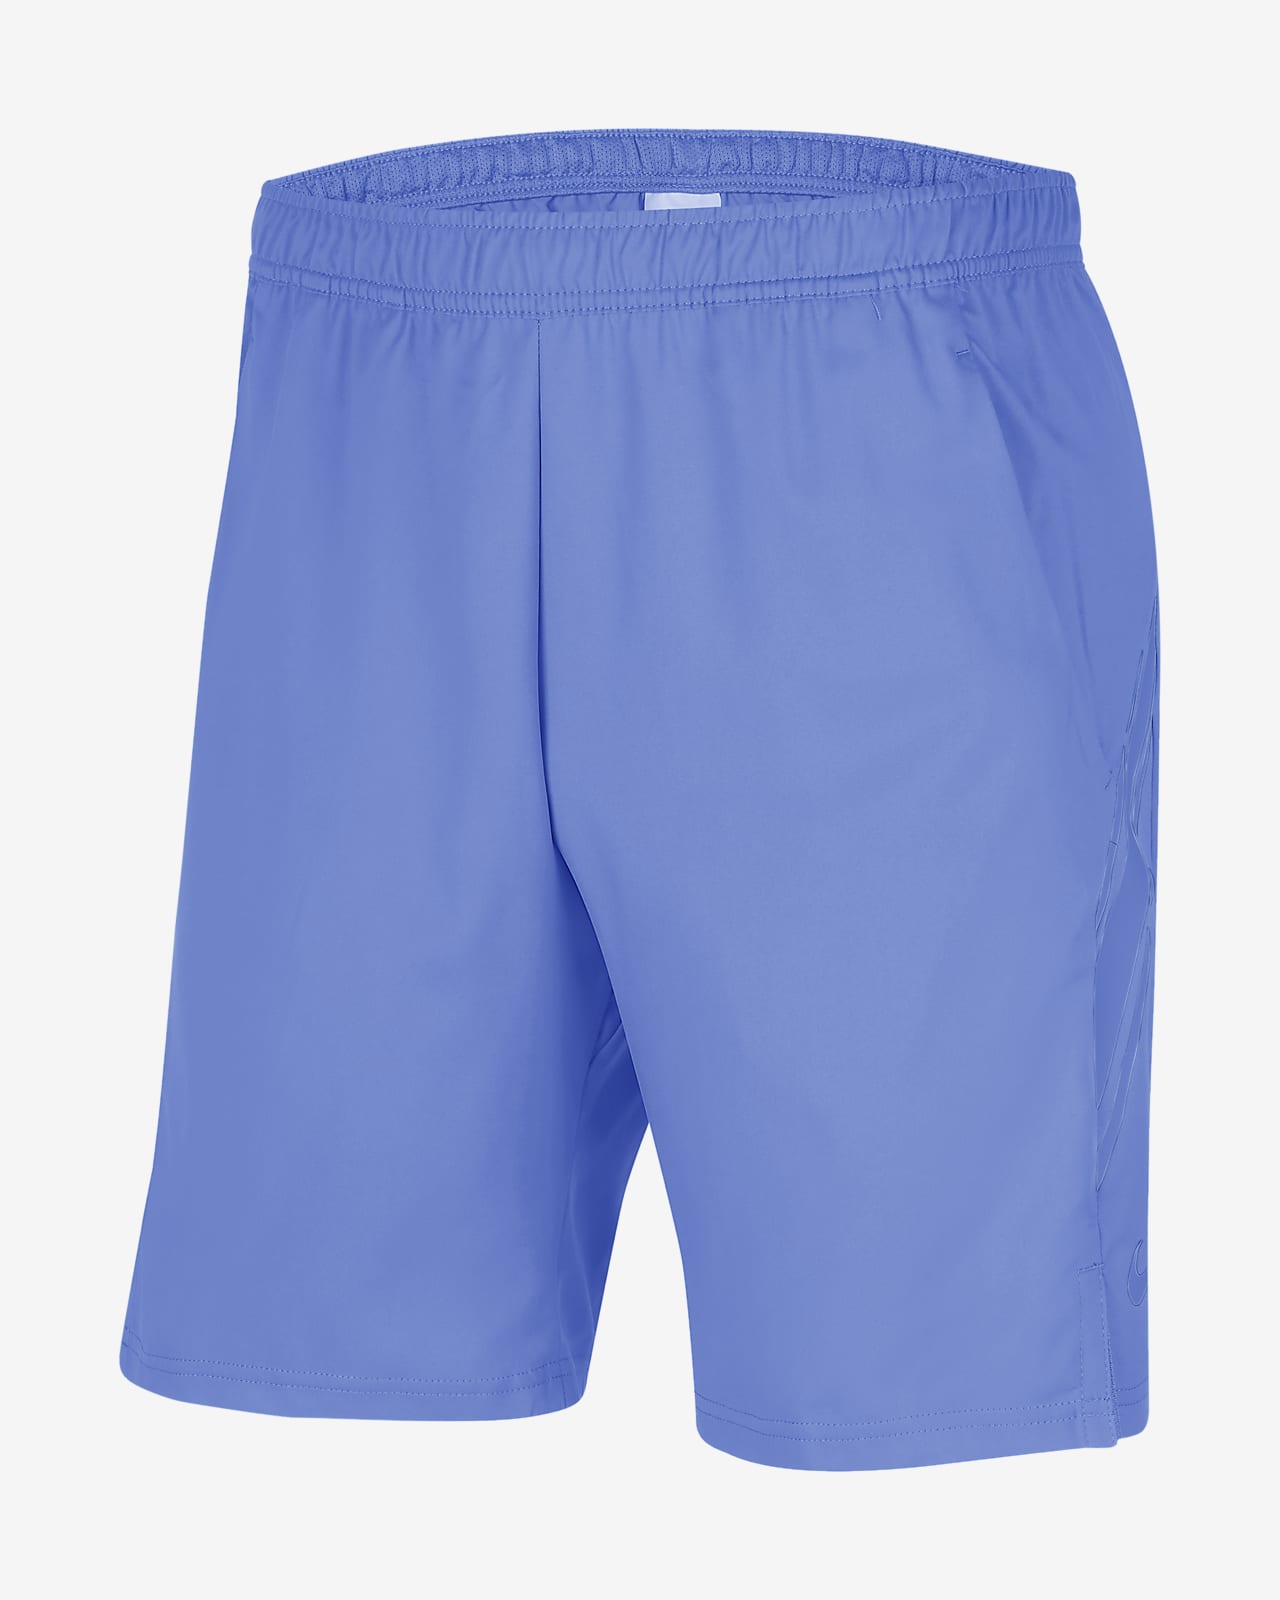 NikeCourt Dri-FIT Men's 9 (23cm approx.) Tennis Shorts